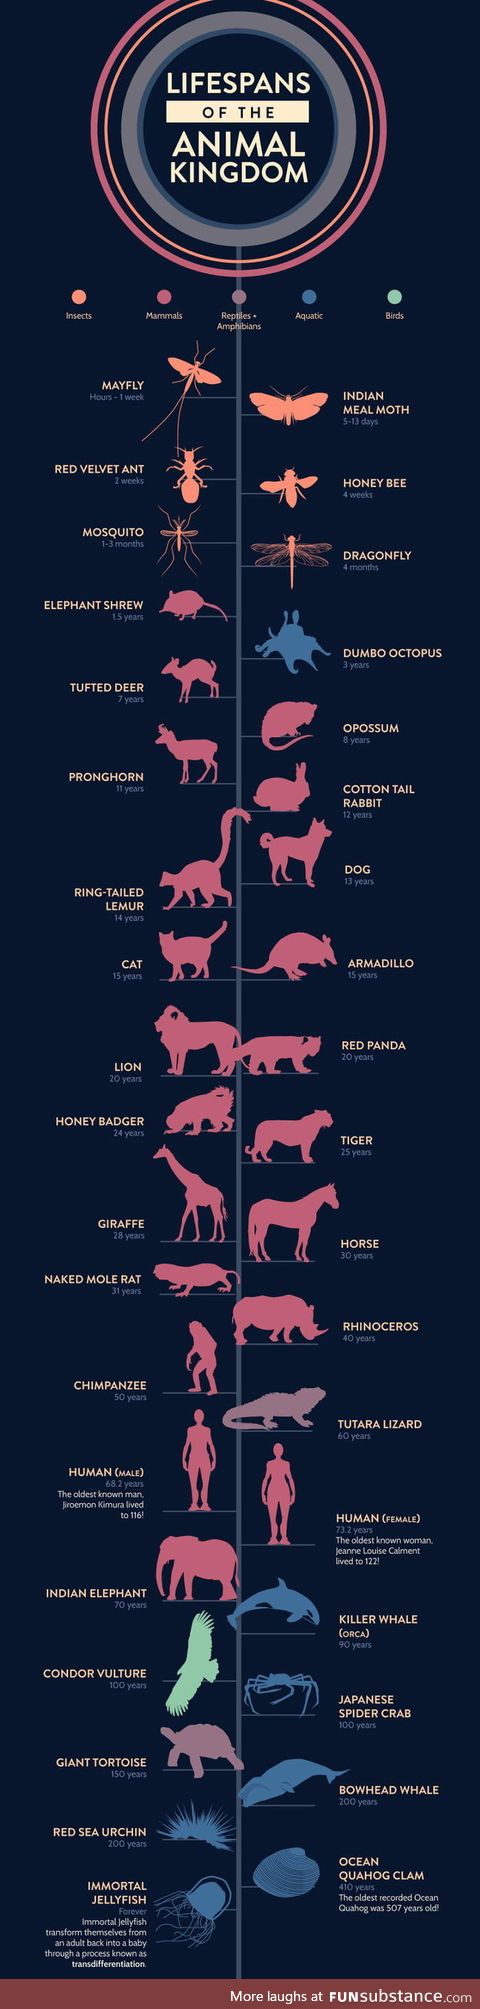 Lifespans of the animal kingdom